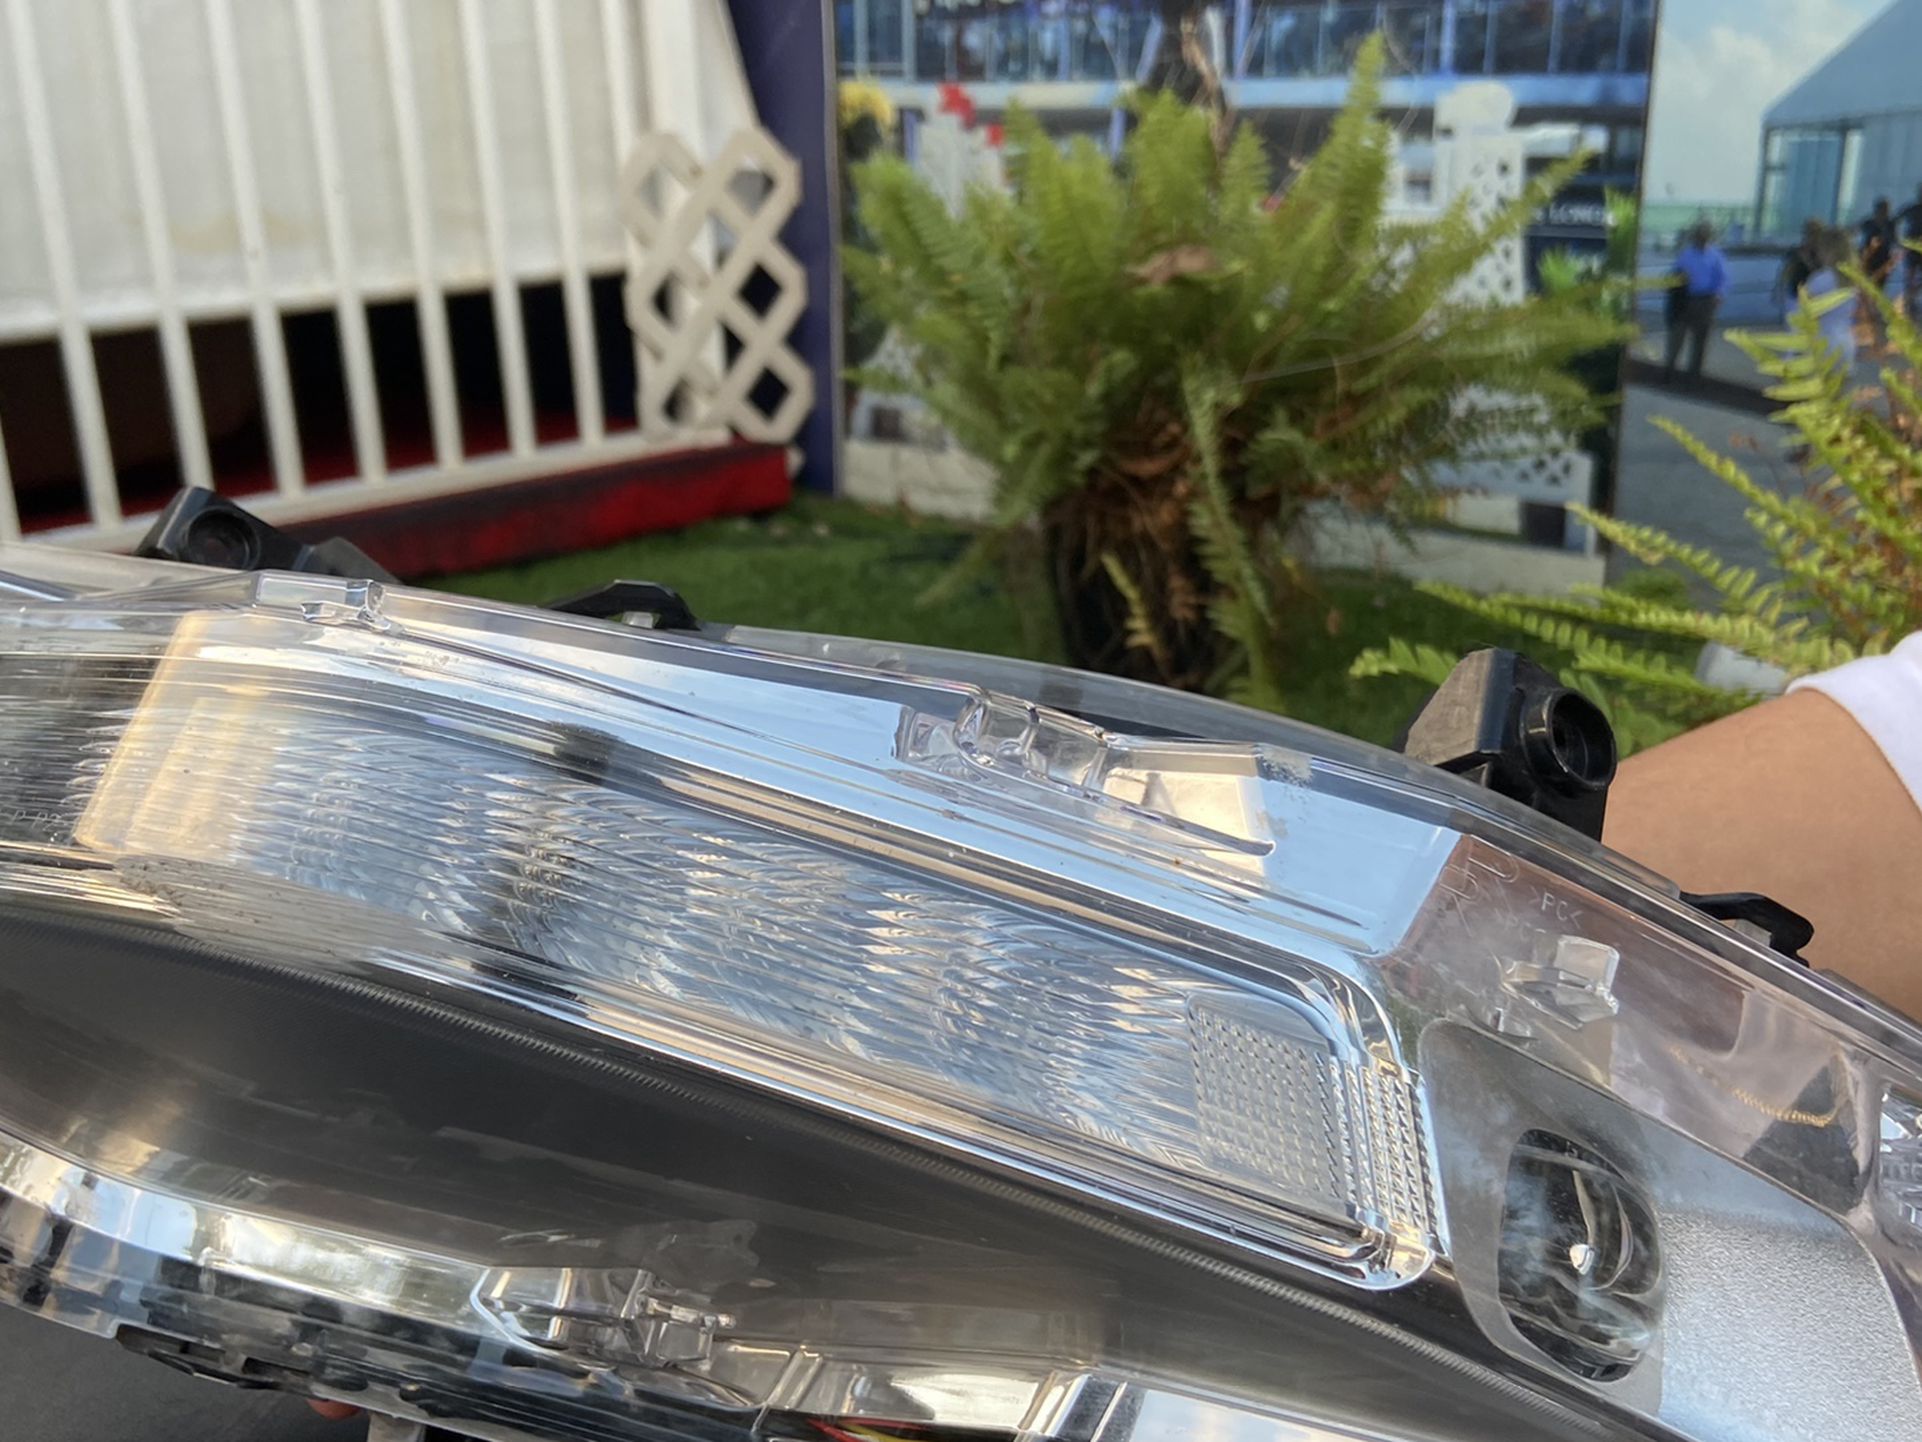 Bottom right Headlight For Ford Mustang 2018